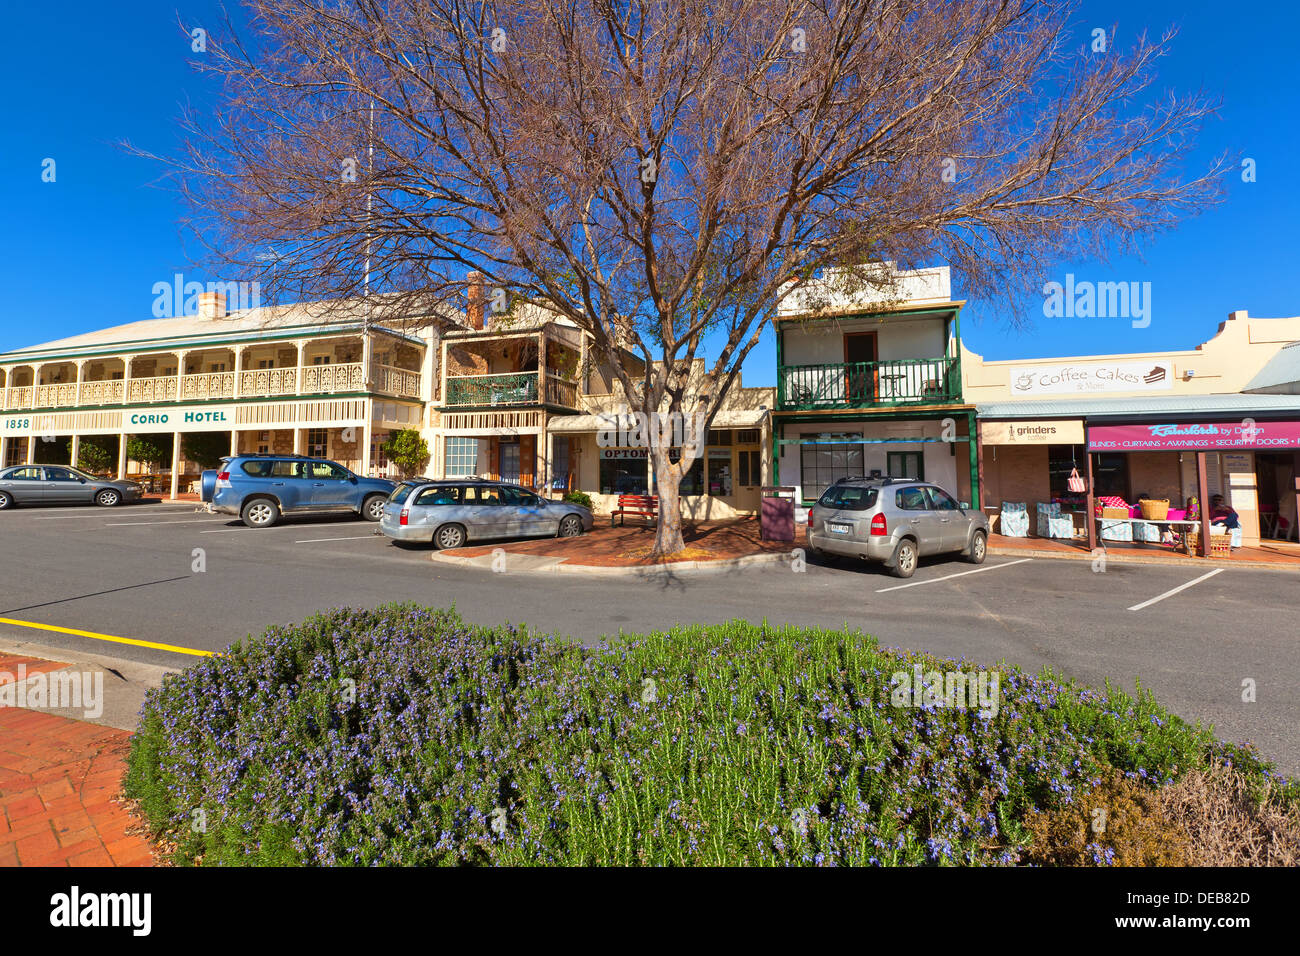 Corio altes historisches Erbe Murray River Goolwa South Australia australischen Hotelbalkon Stockfoto